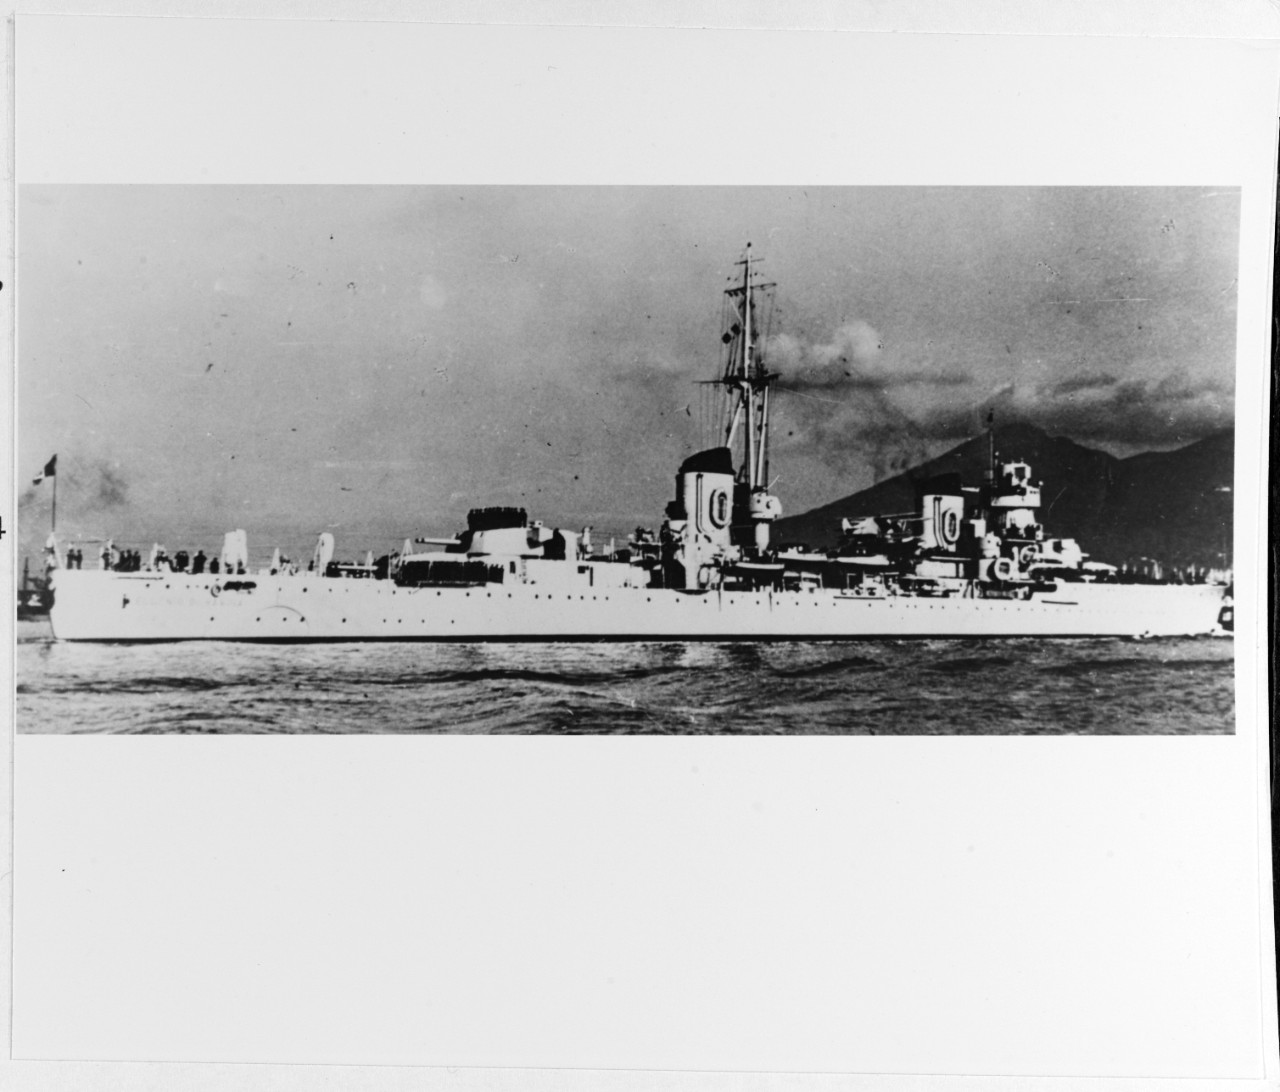 EUGENIO DI SAVOIA (Italian light cruiser, 1935-1964)